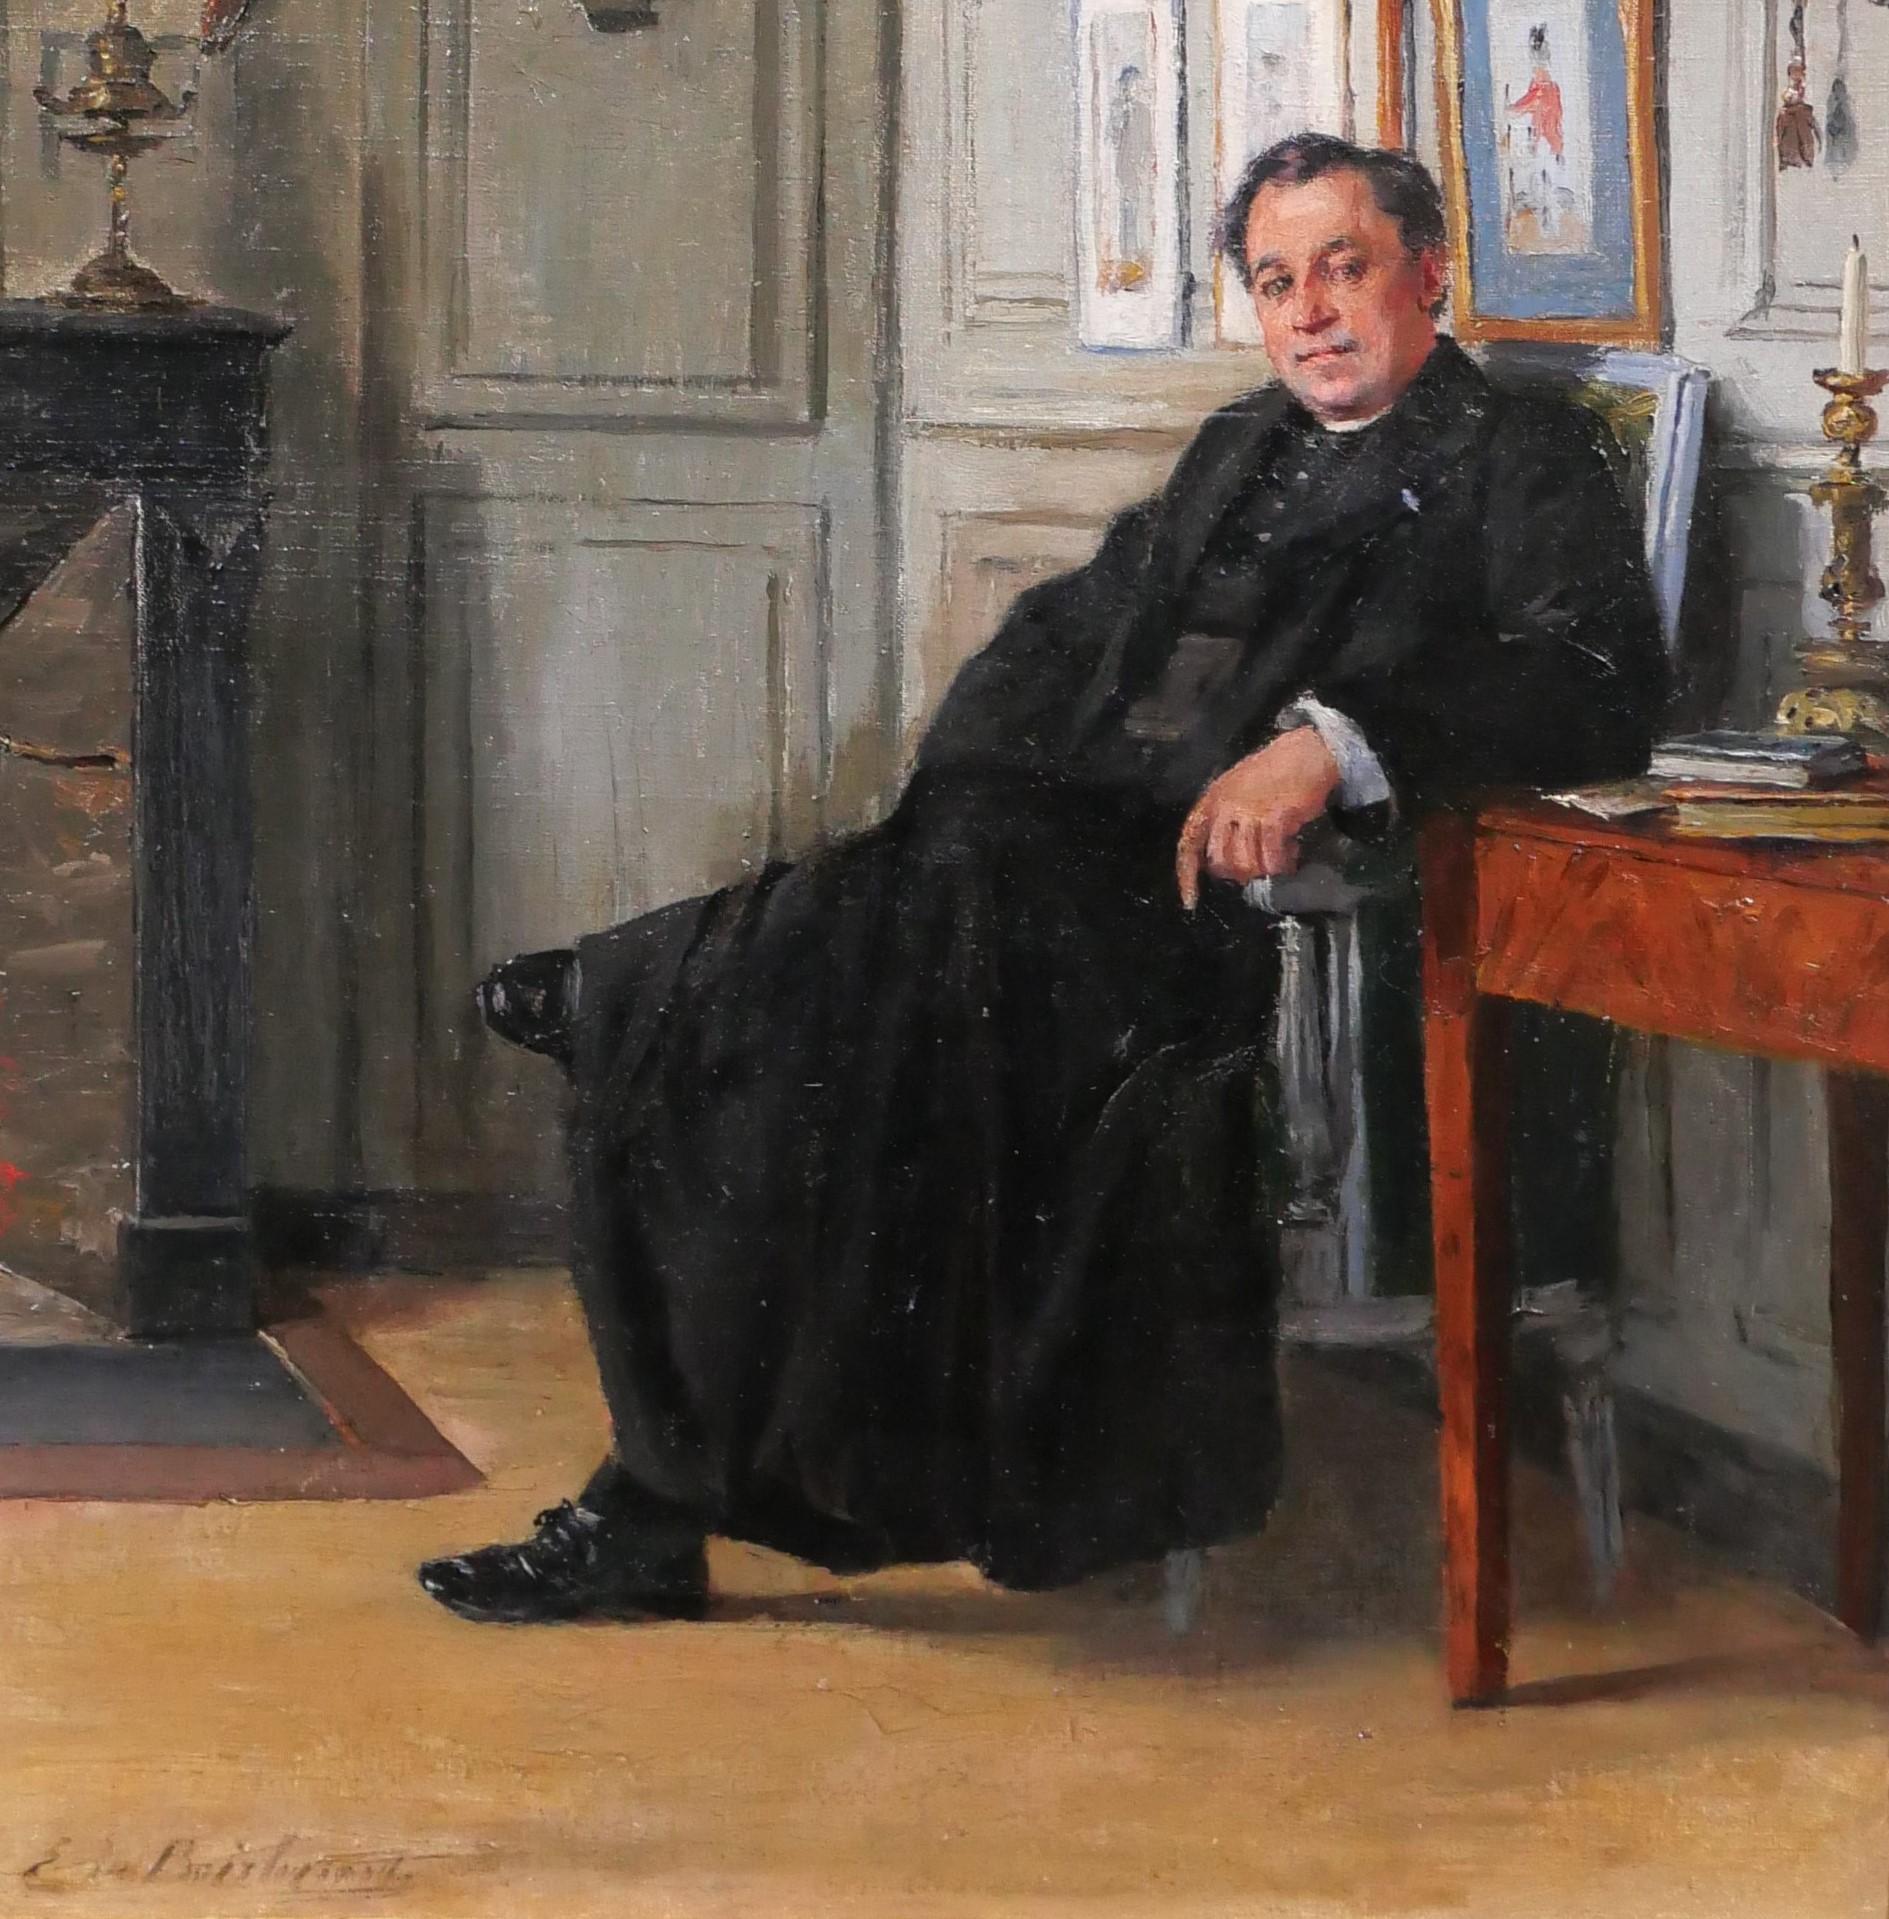 Edmond Marie Félix de Boislecomte
Arras, 1849 - Paris, 1922
Portrait of a man in his interior
Painting, oil on canvas
Signed
Painting: 38 x 46 cm (15 x 18.1 inches)
Beautiful 19th century frame: 47 x 55 cm (18.5 x 21.6 inches)
Very good